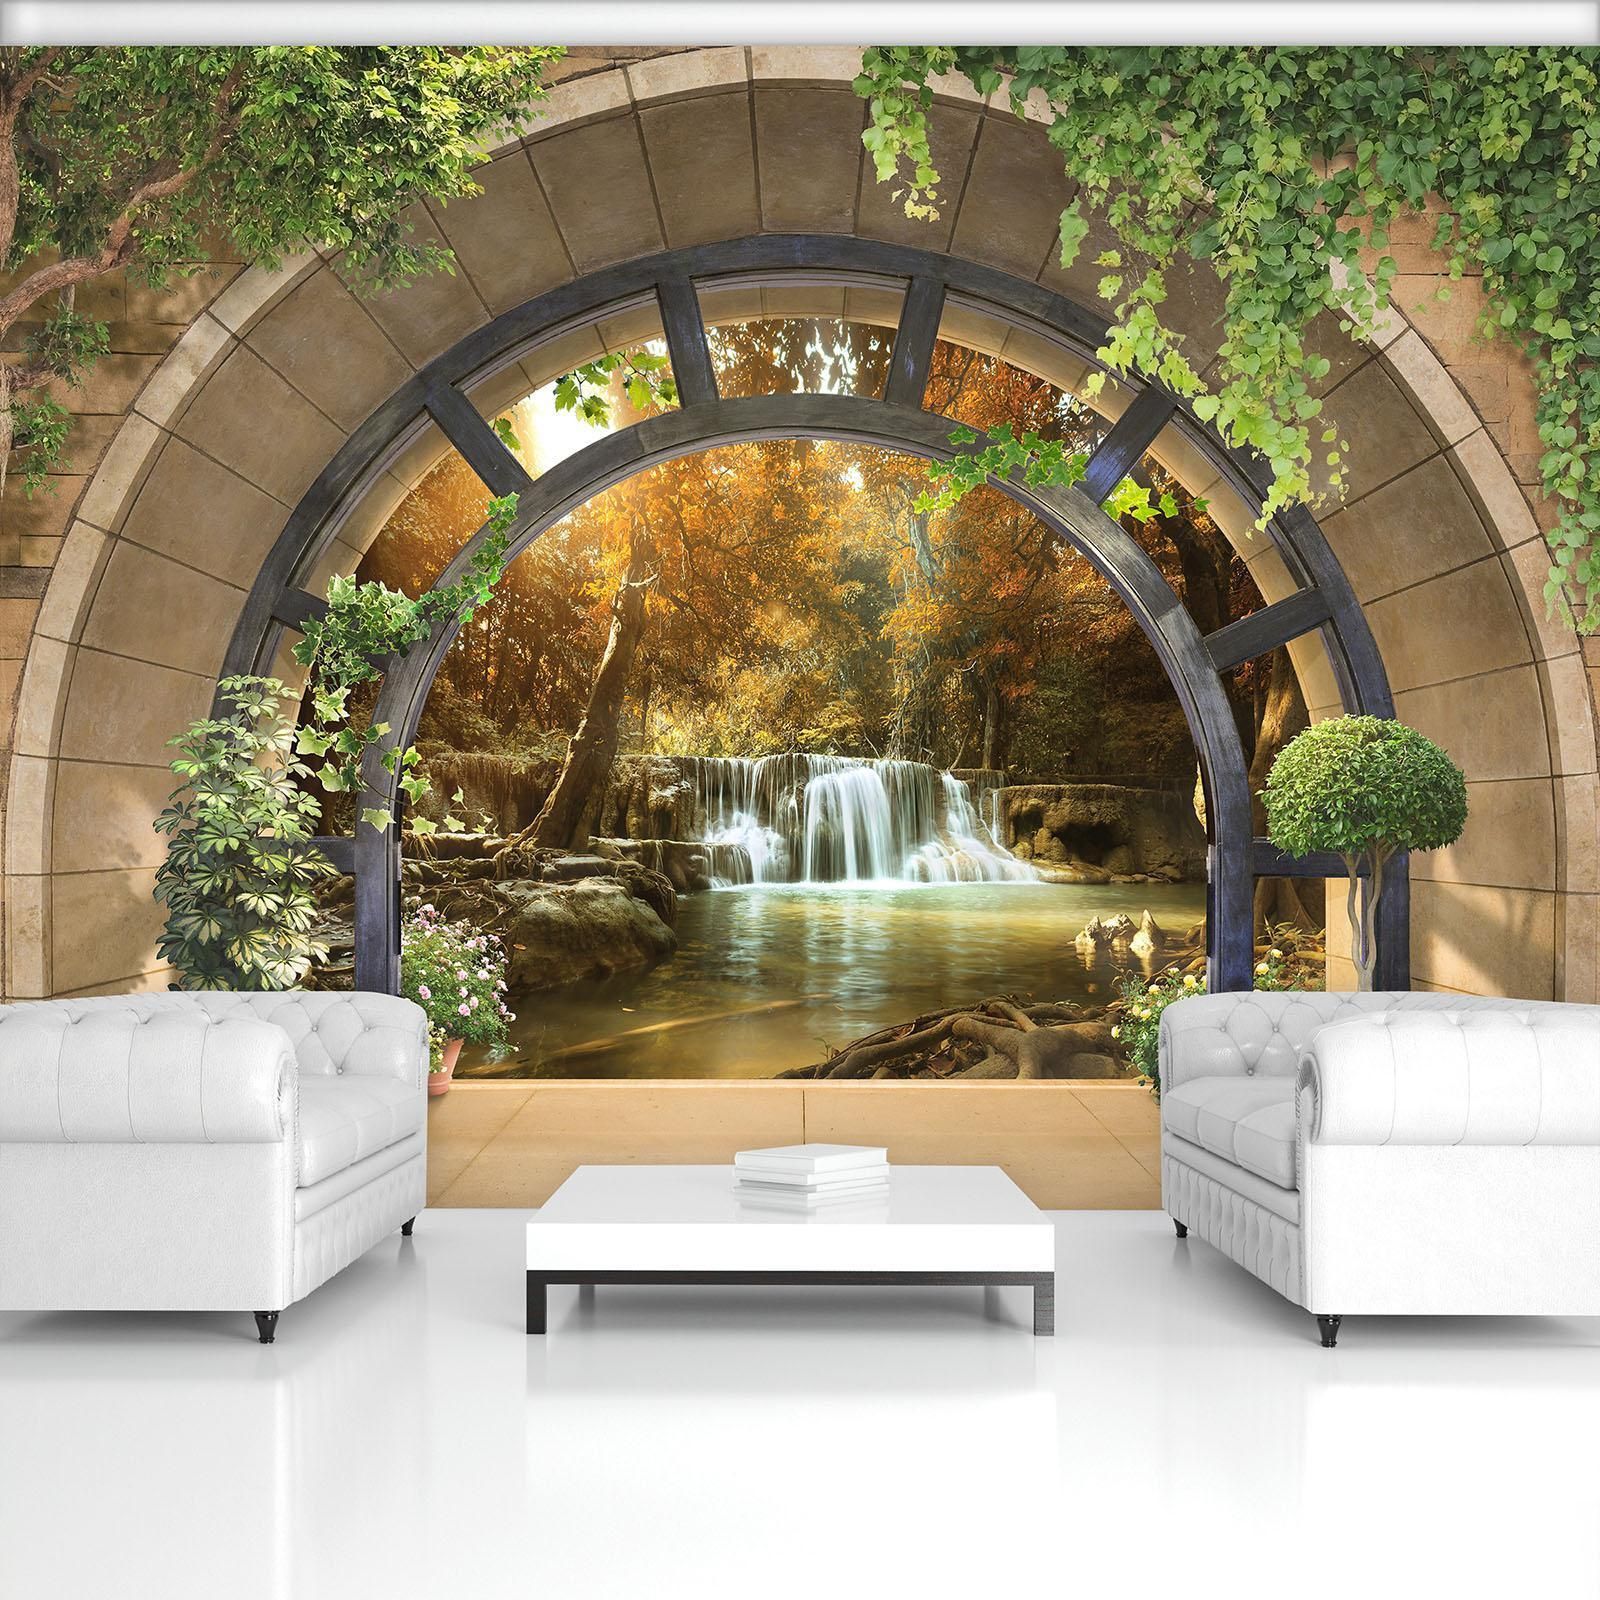 壁紙3d effekt,壁画,自然の風景,壁,家具,アーチ